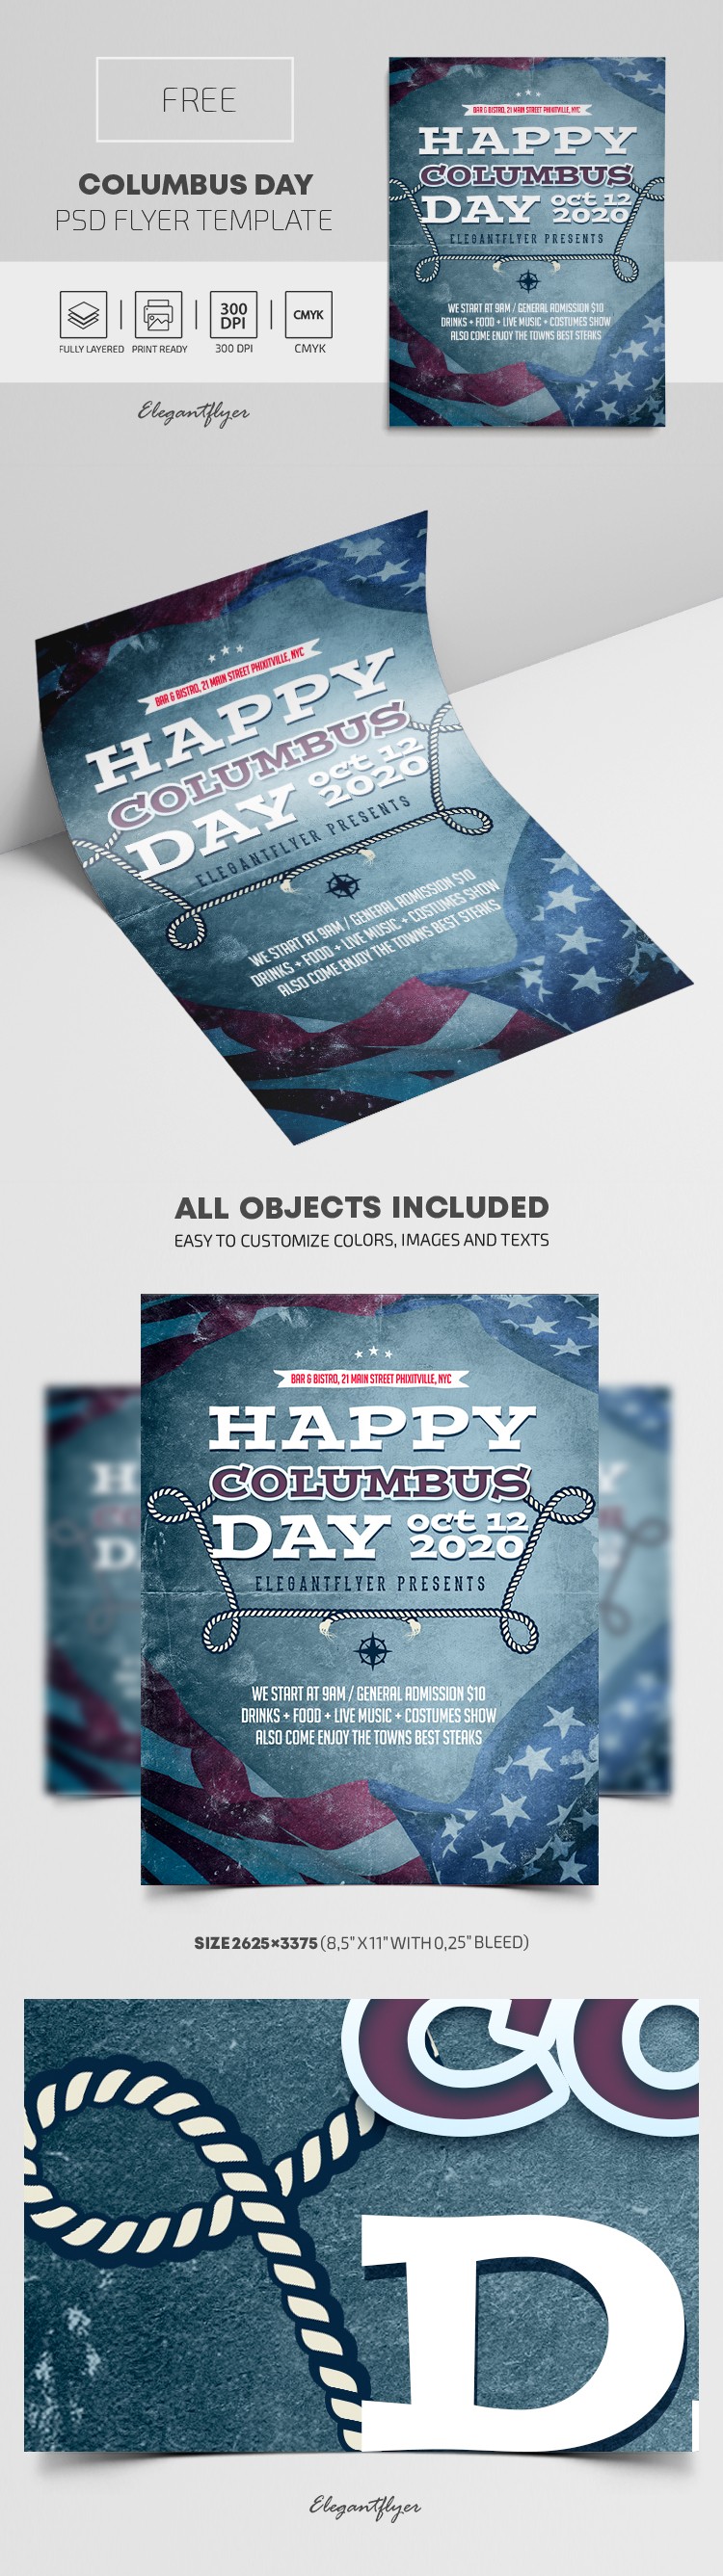 Columbus Day Flyer by ElegantFlyer